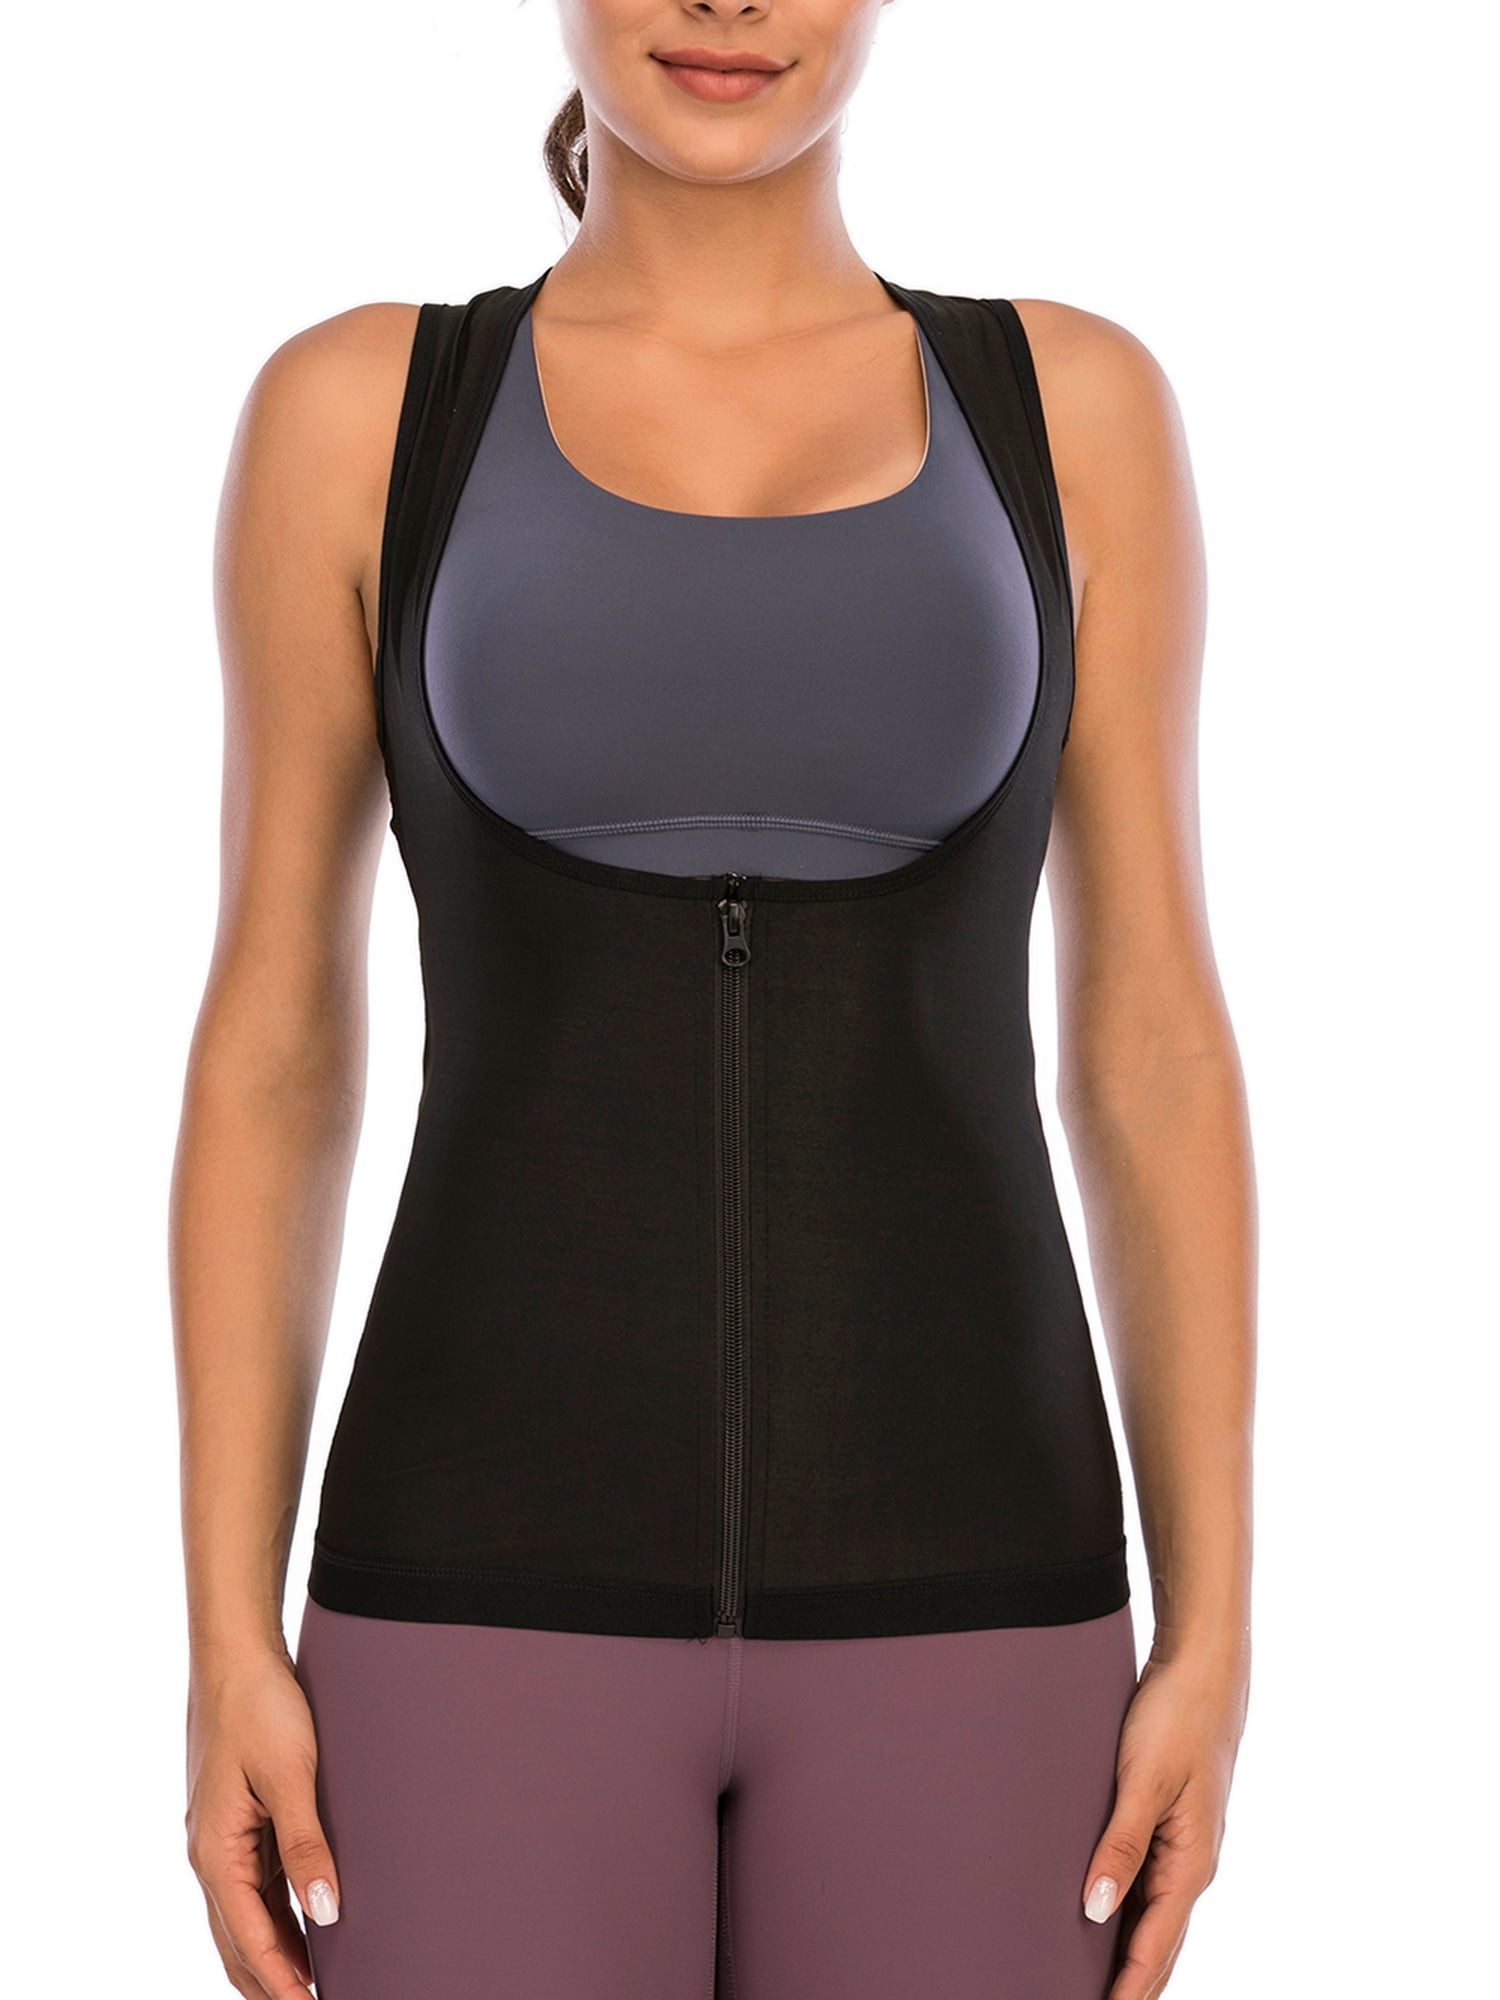 HOMETA Sweat Vest for Women Waist Trainer Vest for Women Slimming Polymer Sauna Vest Tank Top for Weight Loss Body Shaper Shirts